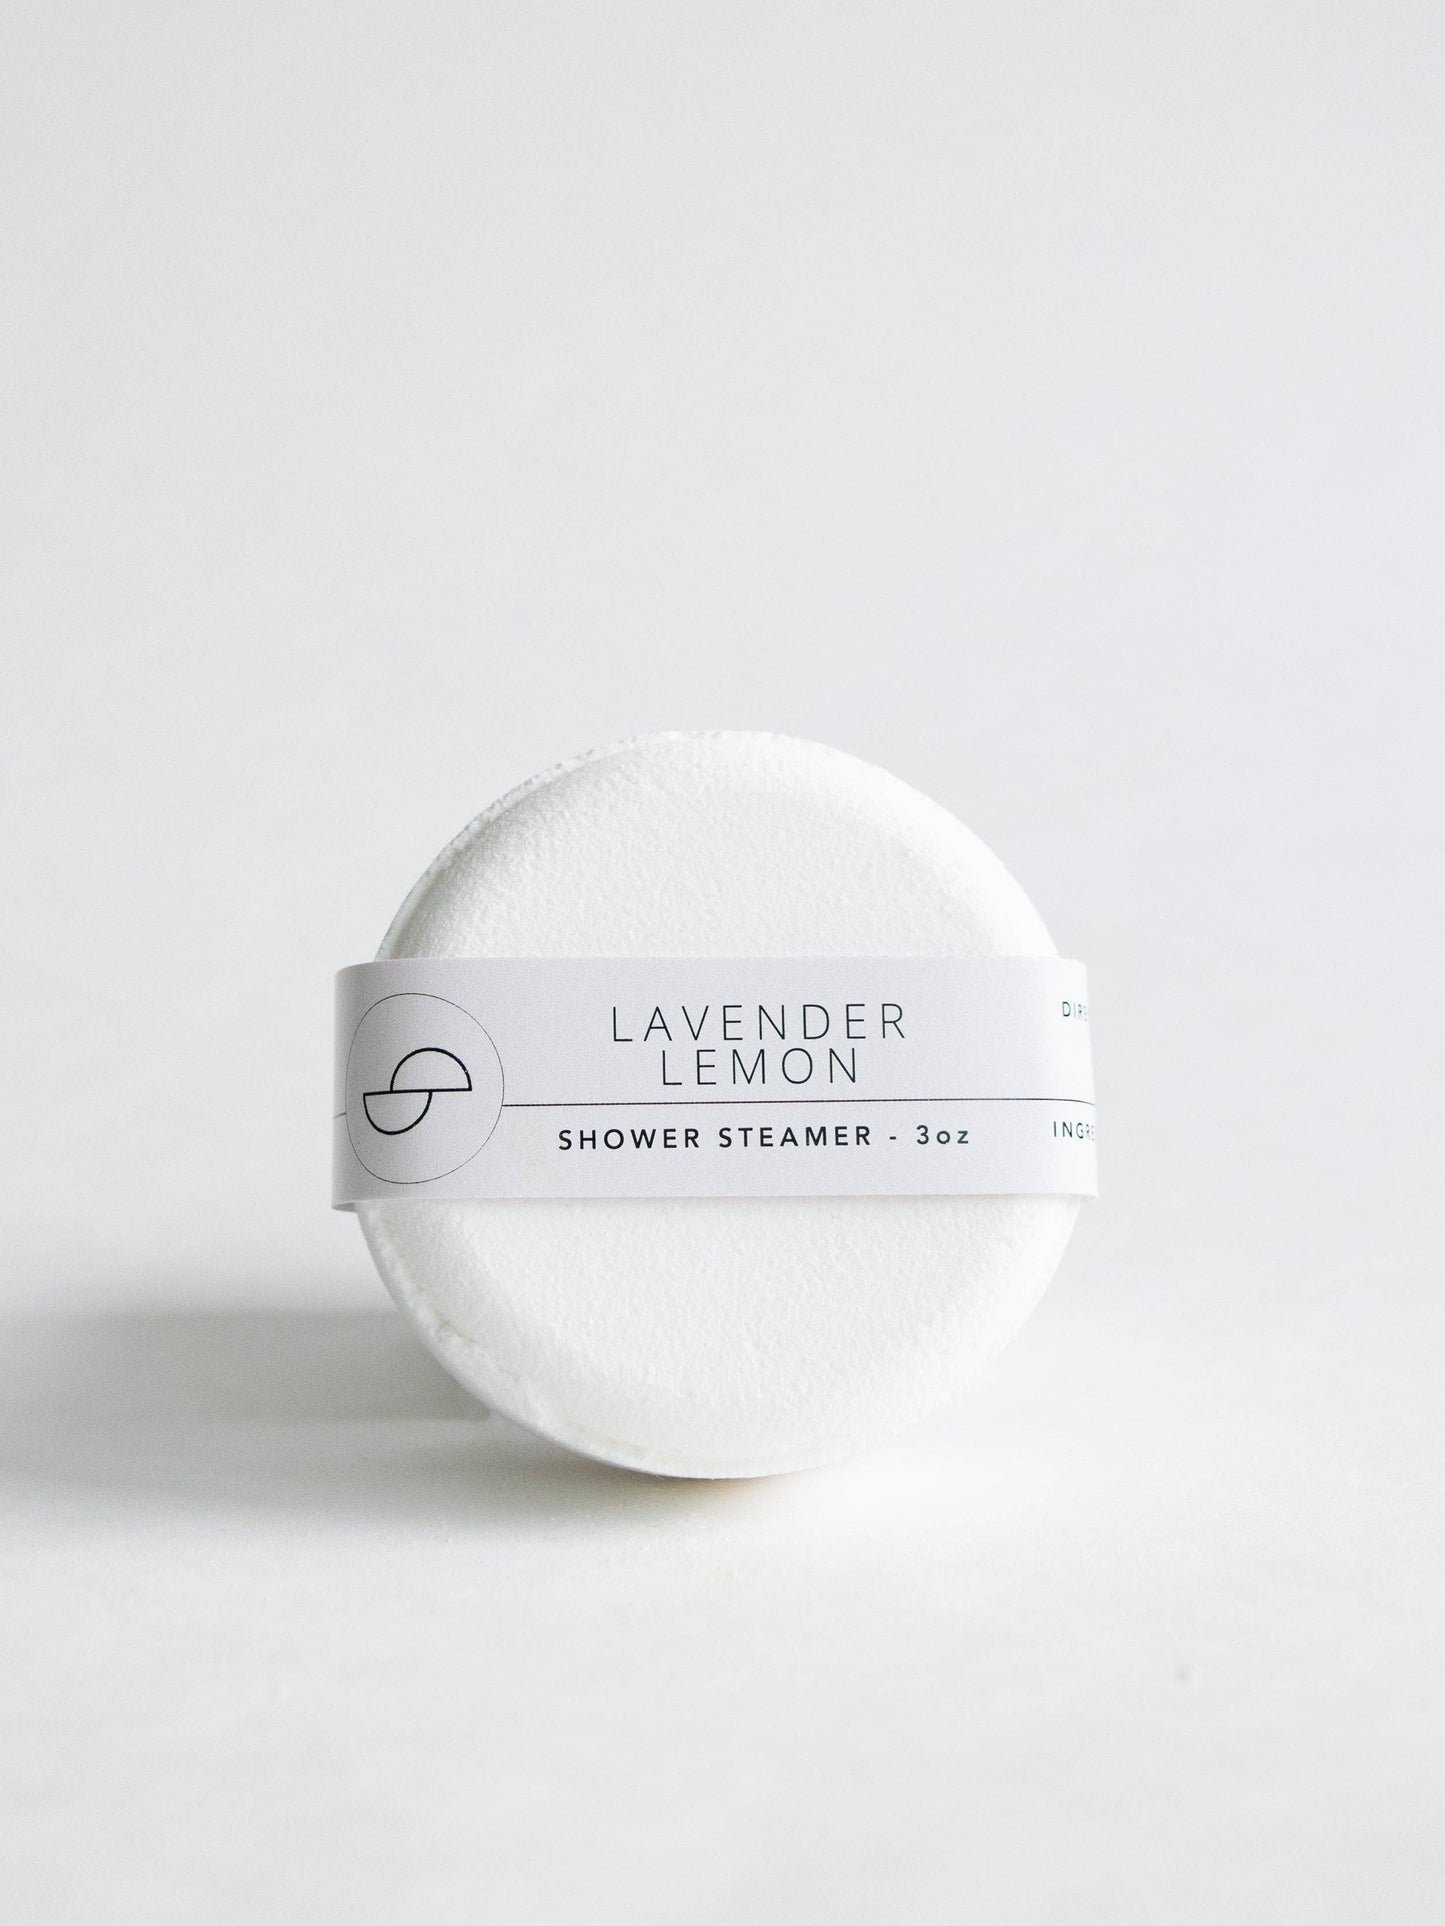 Lend Me Some Sugar Bath Company - Lavender Lemon Shower Steamer